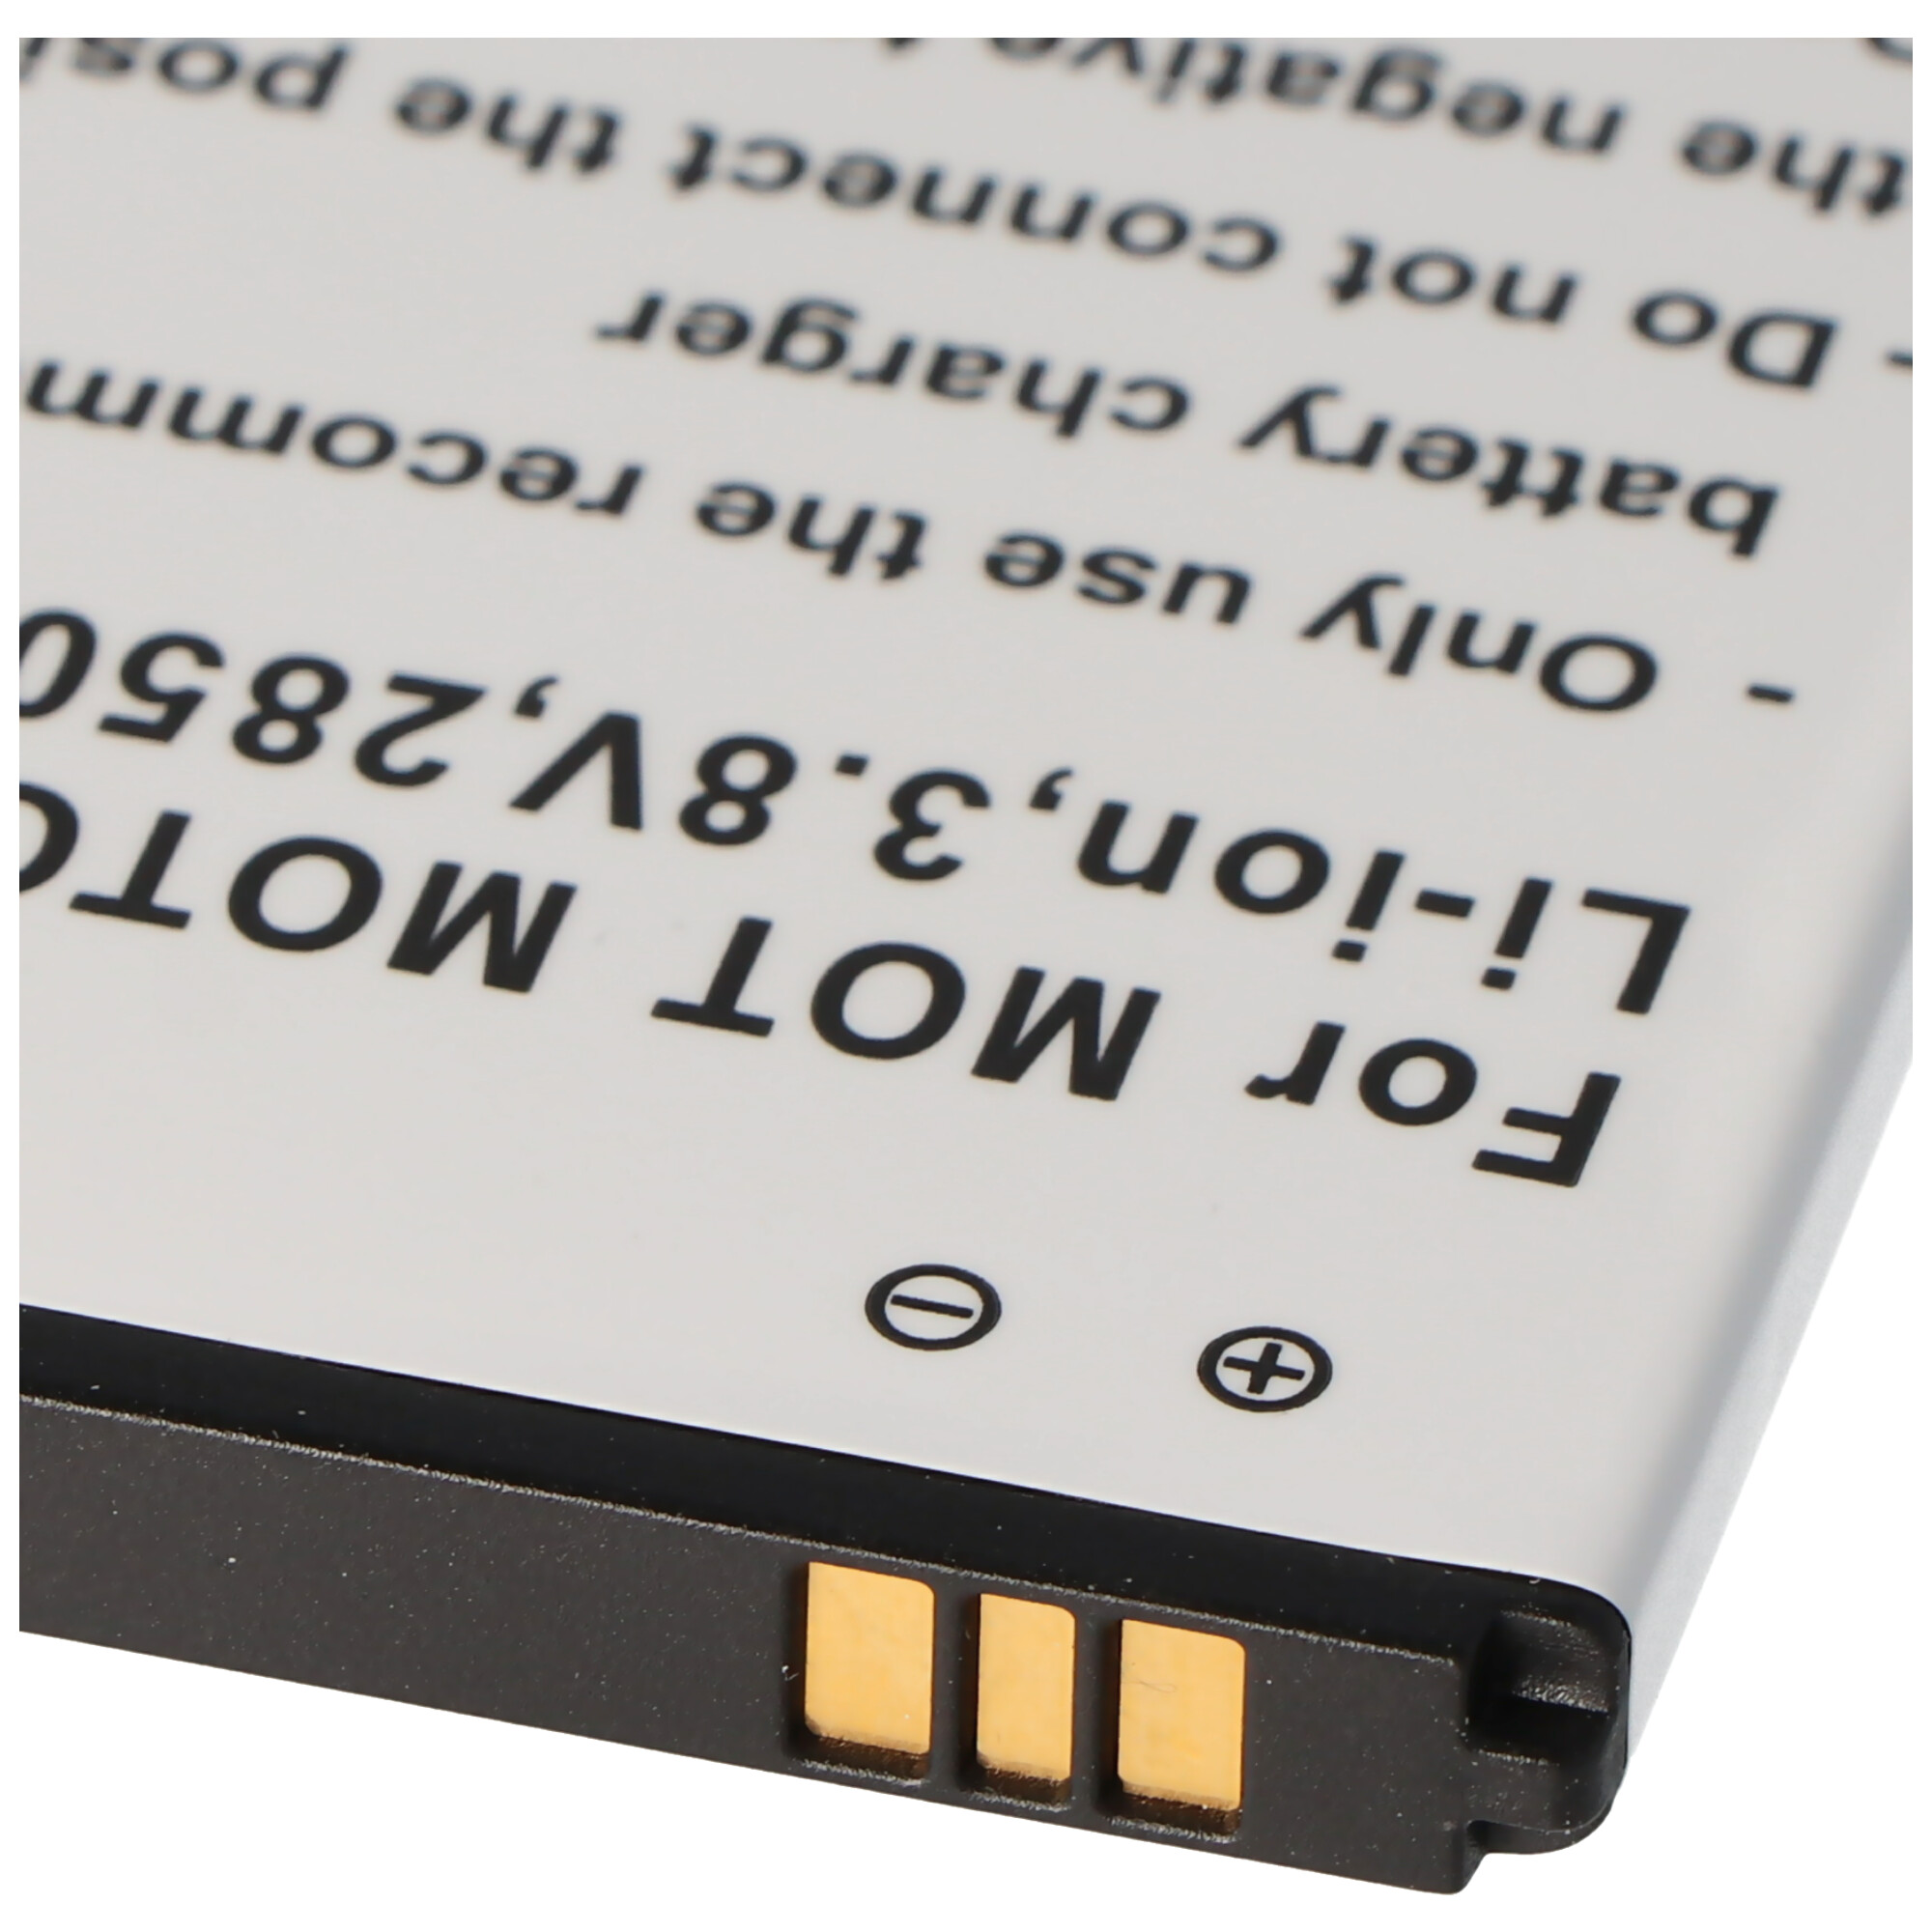 Akku passend für Motorola MOTO C Plus, Li-Ion, 3,8V, 2850mAh, 10,8Wh